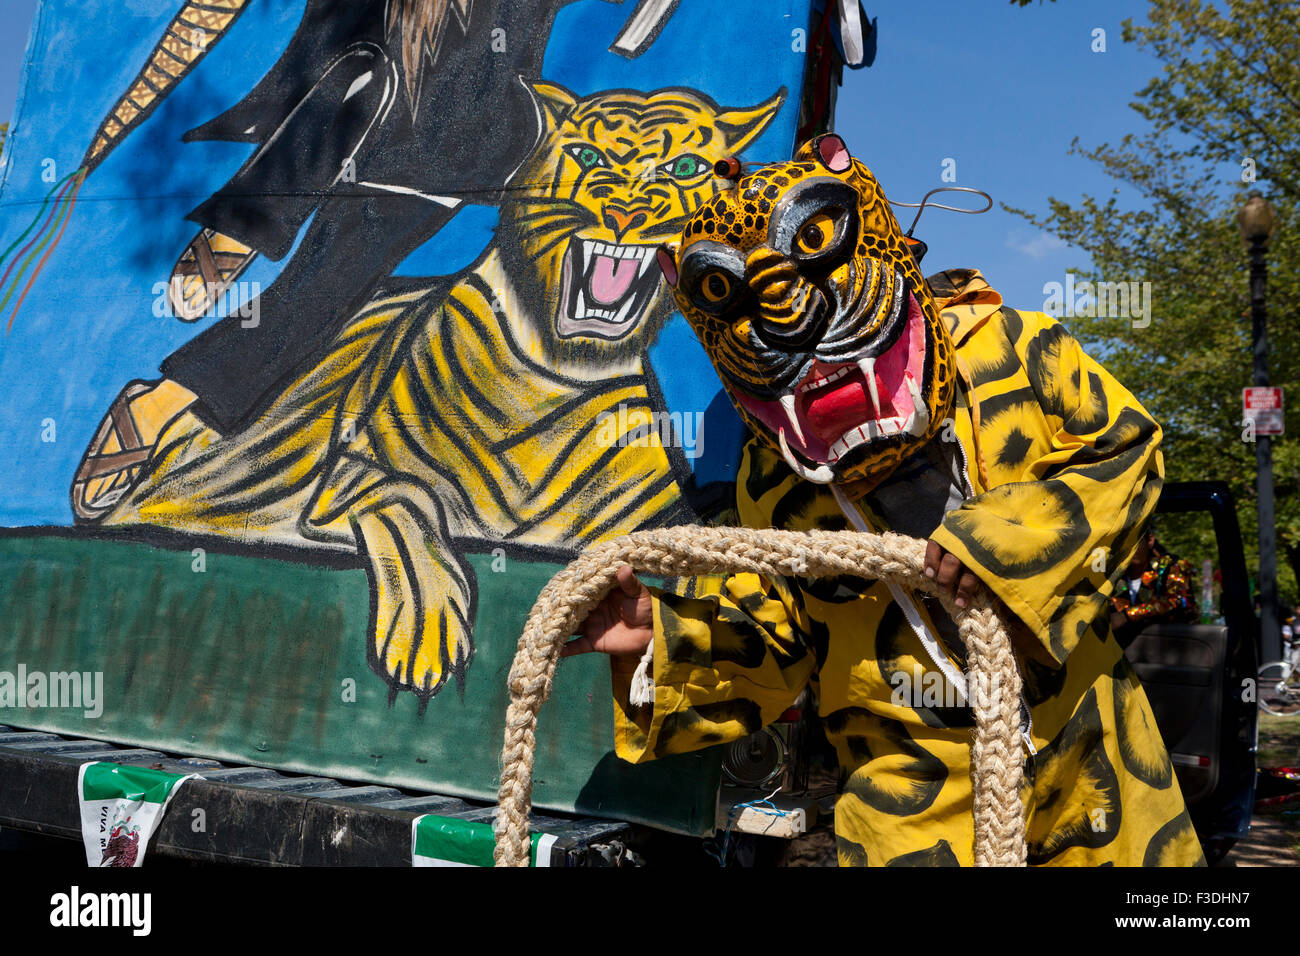 Danza de los Tecuanes (Mexican traditional folk dance) performer in tiger costume during 2015 National Latino Festival - Washington, DC USA Stock Photo